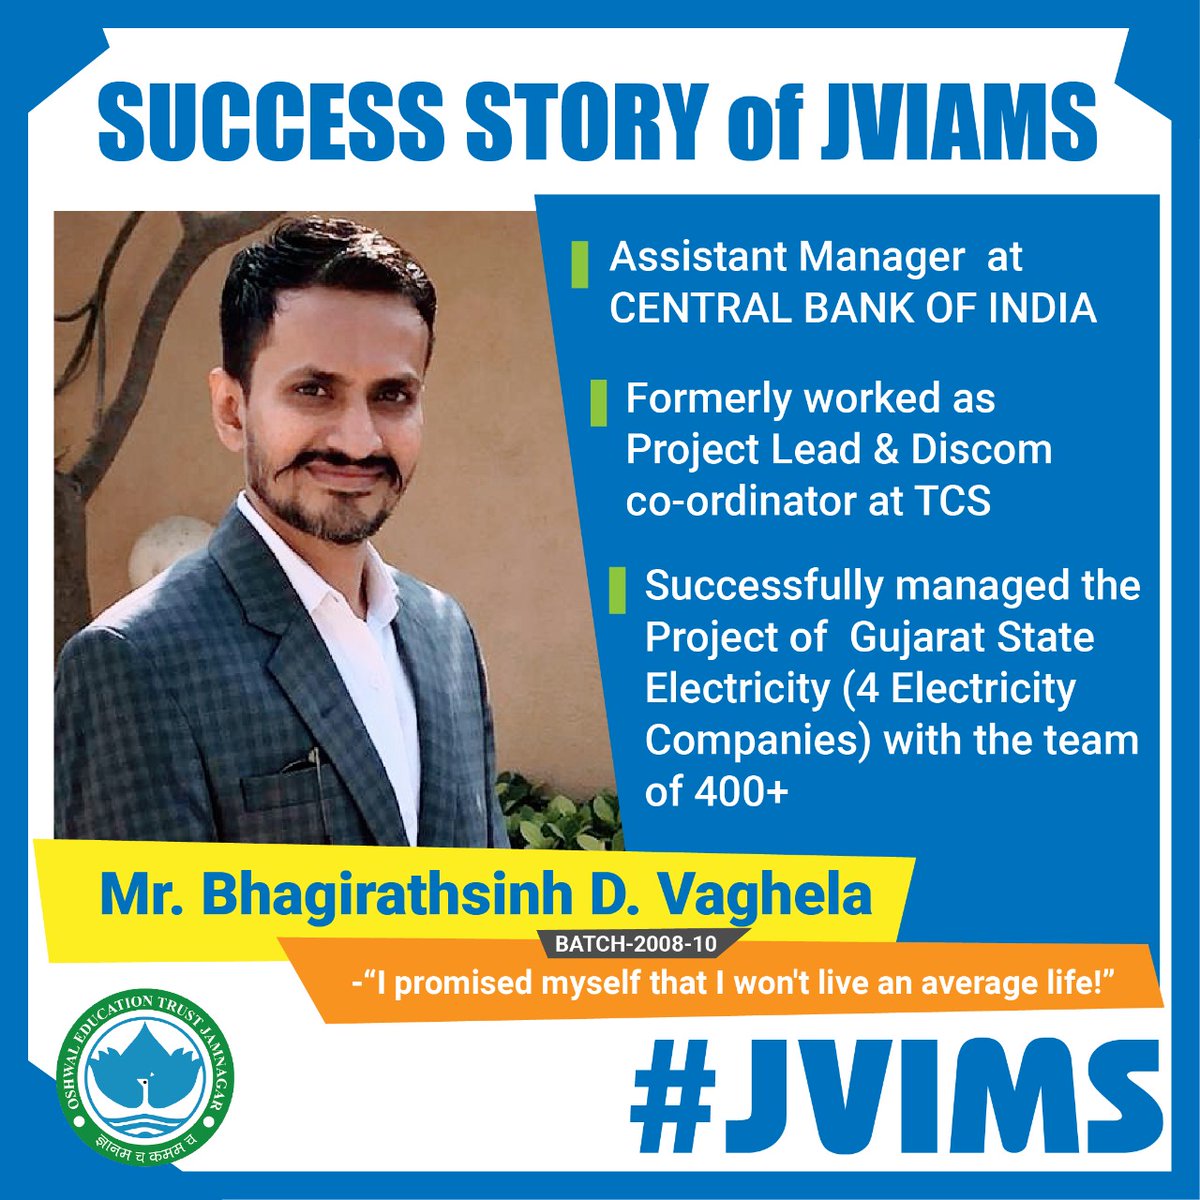 Proud #jviams achieving milestones in his career. 
#jvims #successstoryofjviams #jvimsalumni